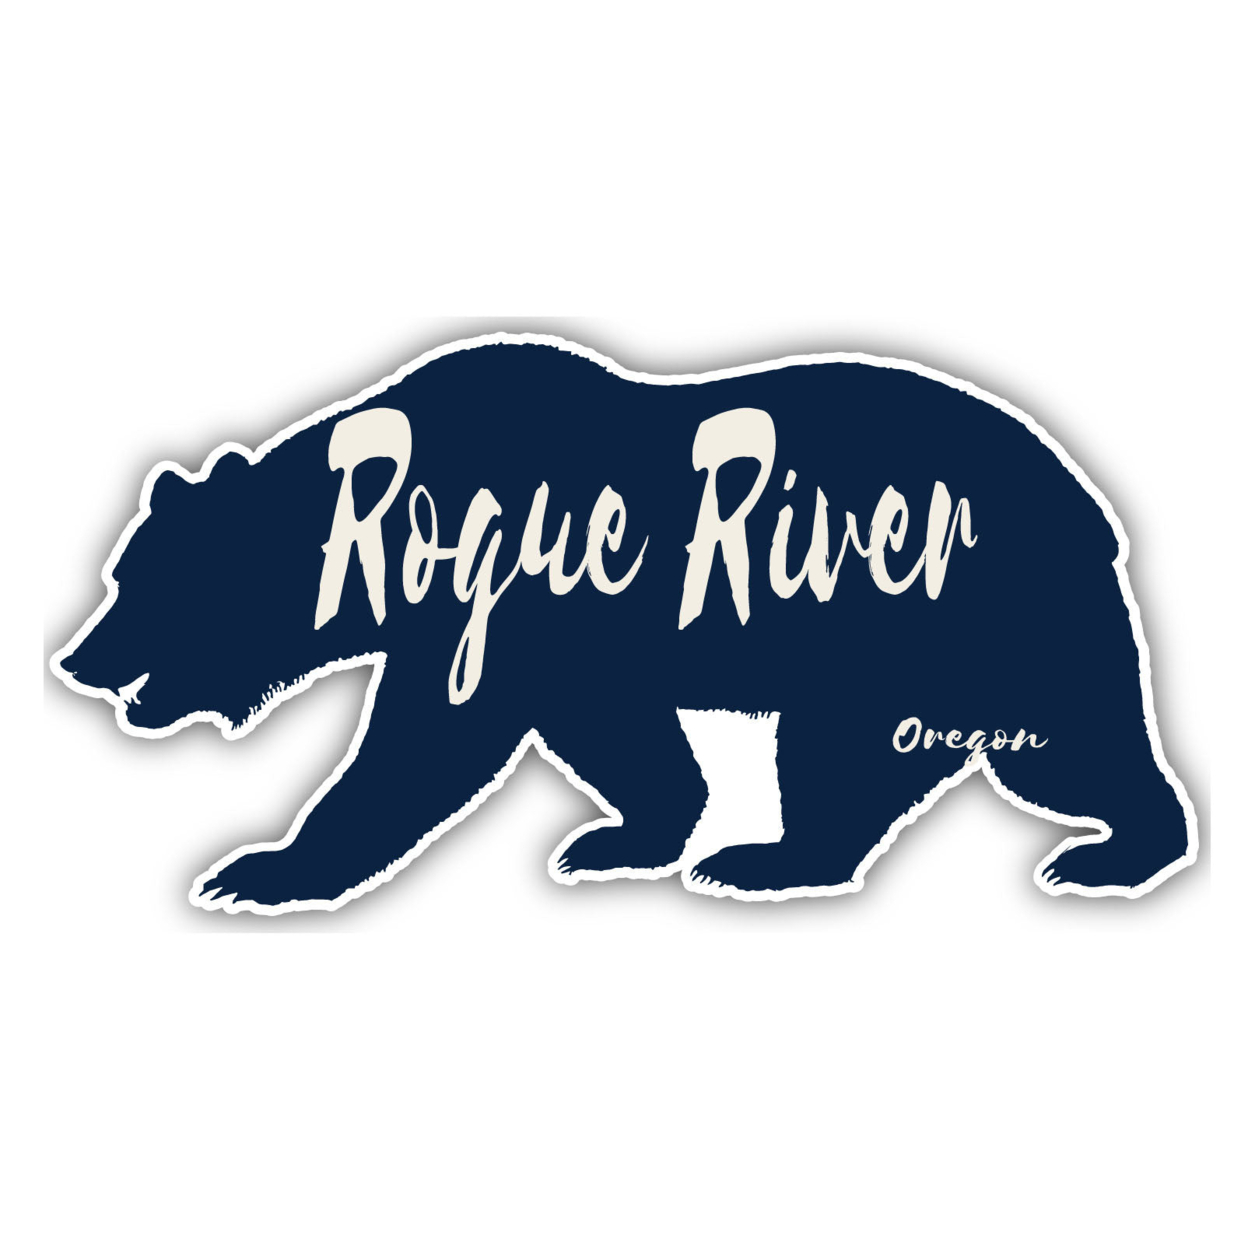 Rogue River Oregon Souvenir Decorative Stickers (Choose Theme And Size) - Single Unit, 2-Inch, Bear